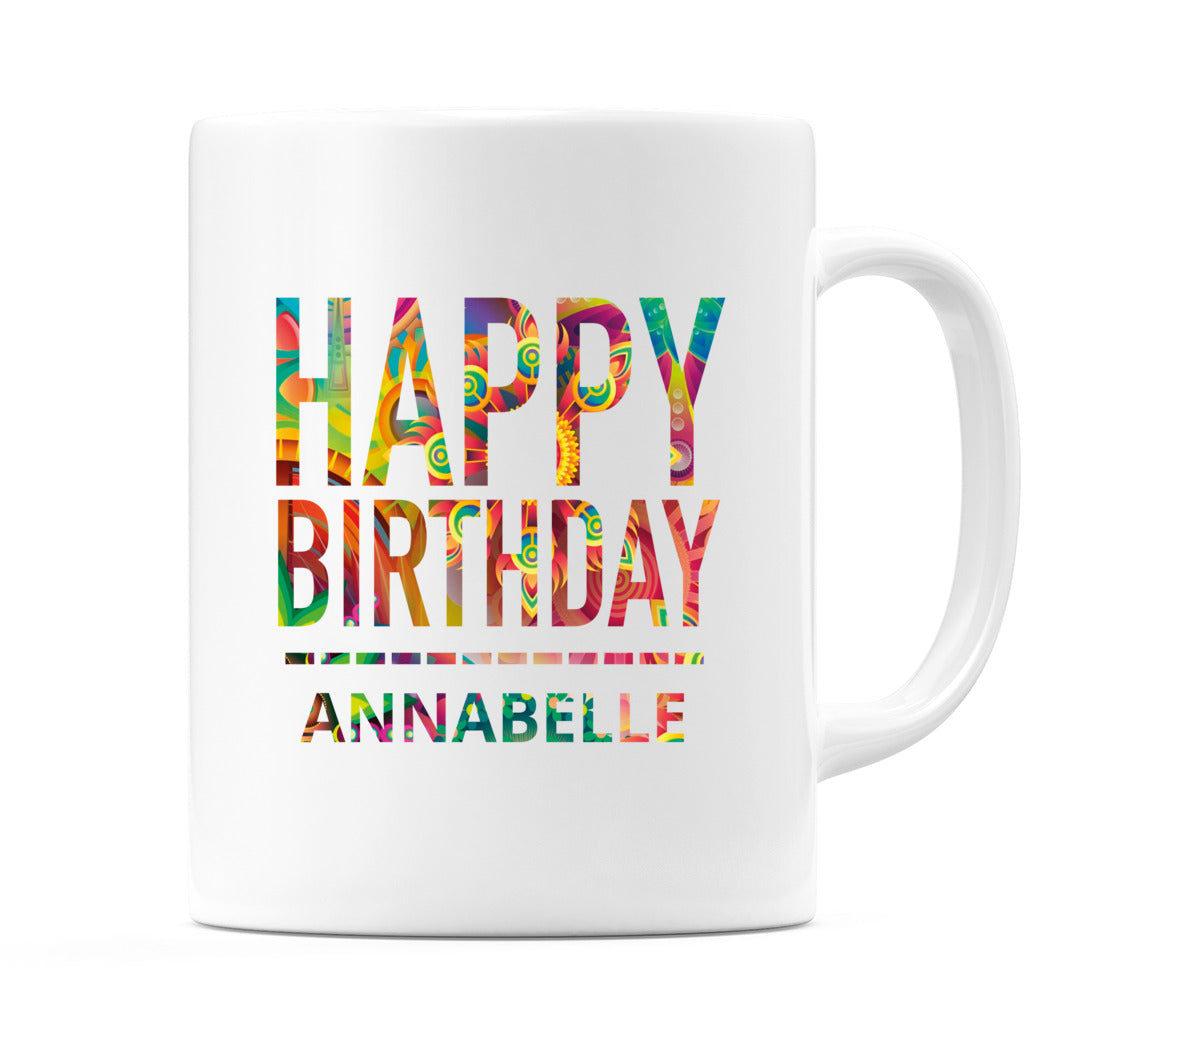 Happy Birthday Annabelle (Tie Dye Effect) Mug Cup by WeDoMugs